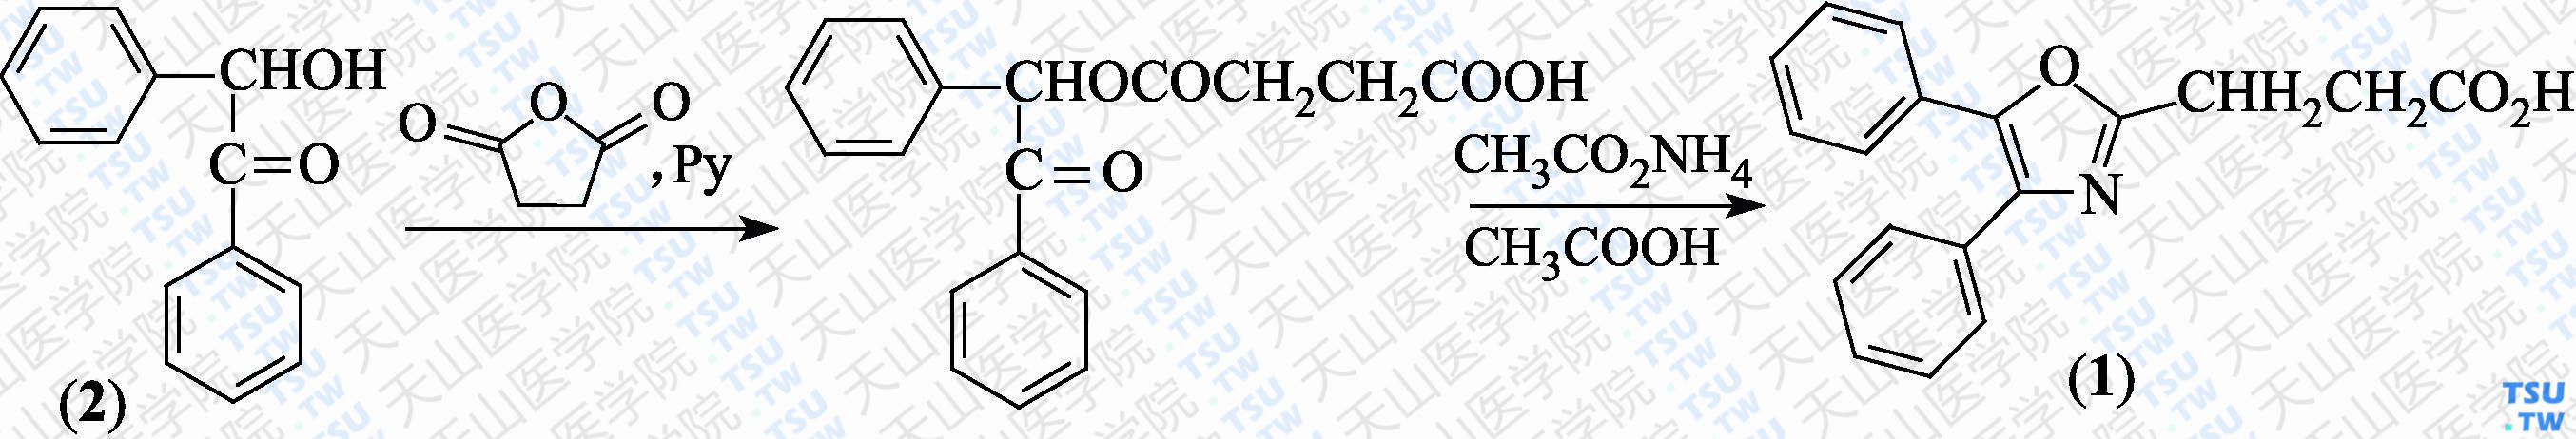 奥沙普秦（分子式：C<sub>18</sub>H<sub>16</sub>NO<sub>3</sub>）的合成方法路线及其结构式